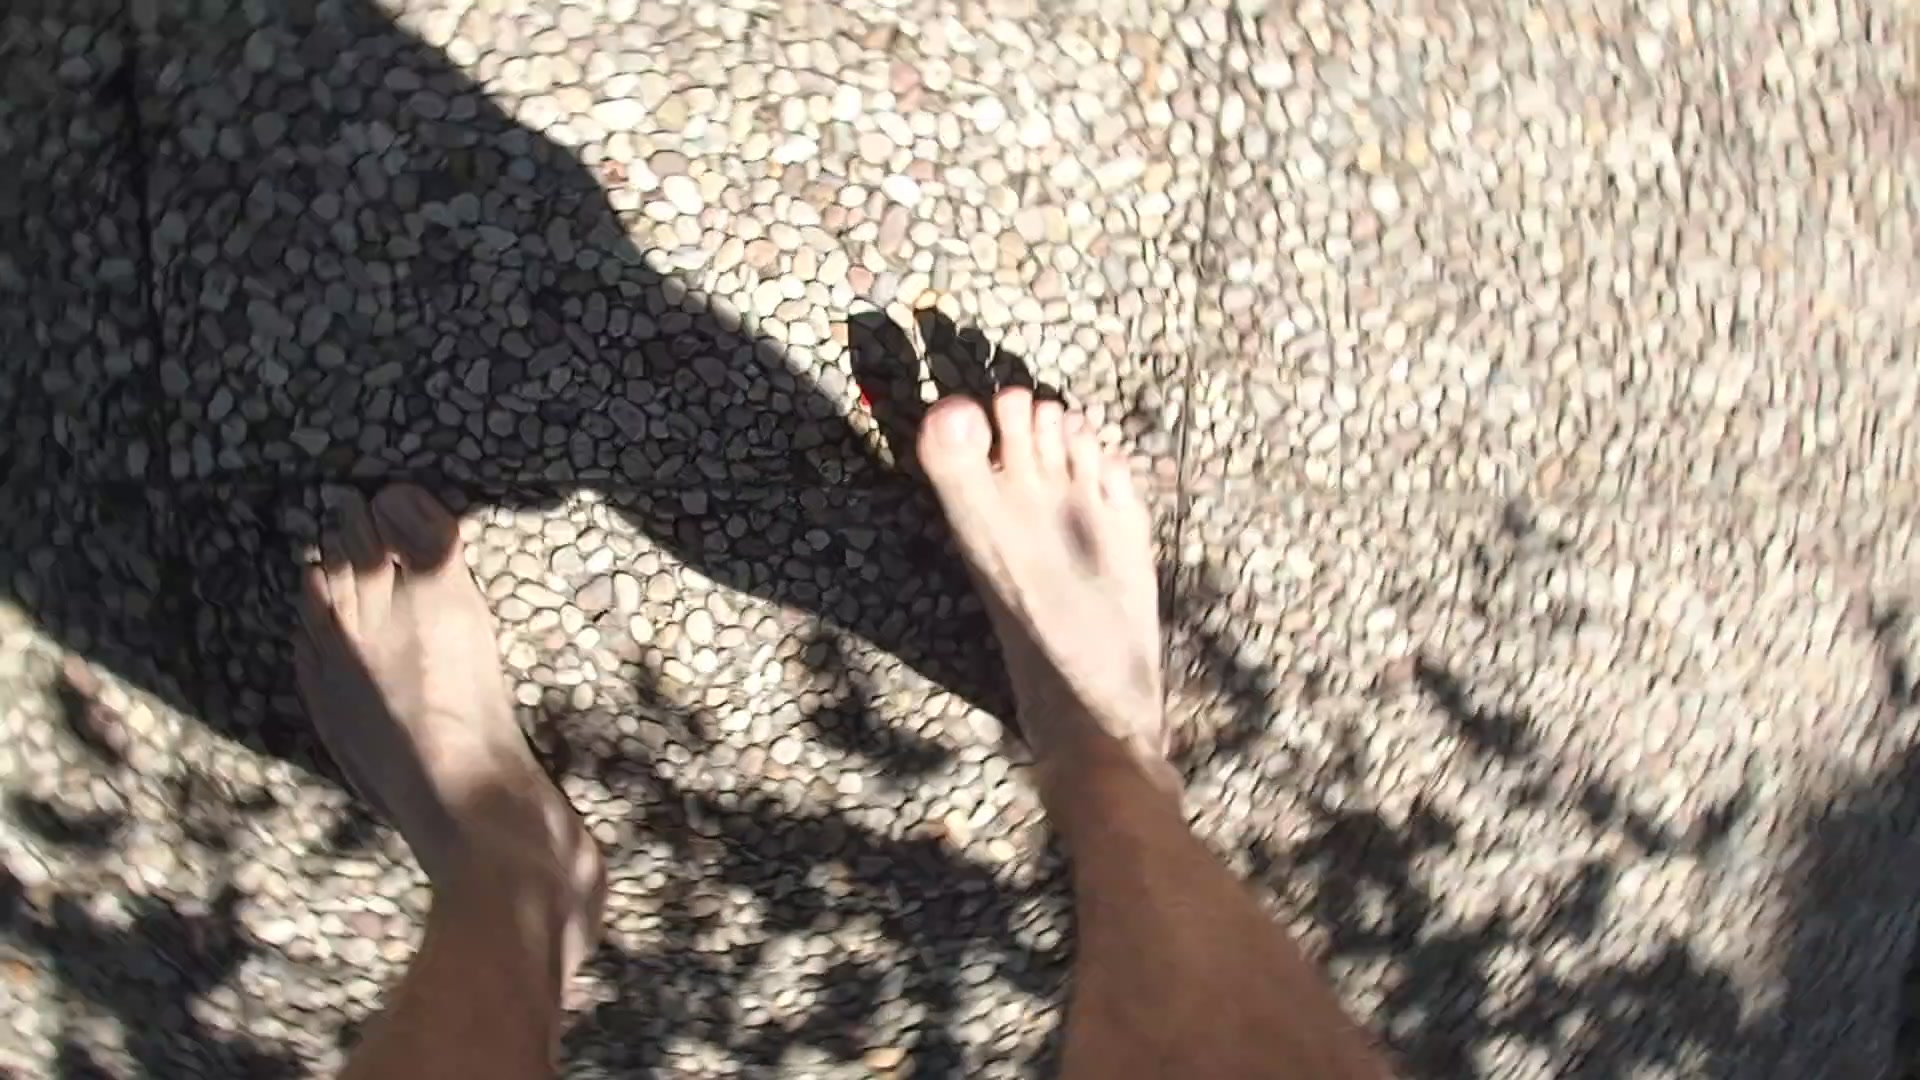 walking barefoot in my garden